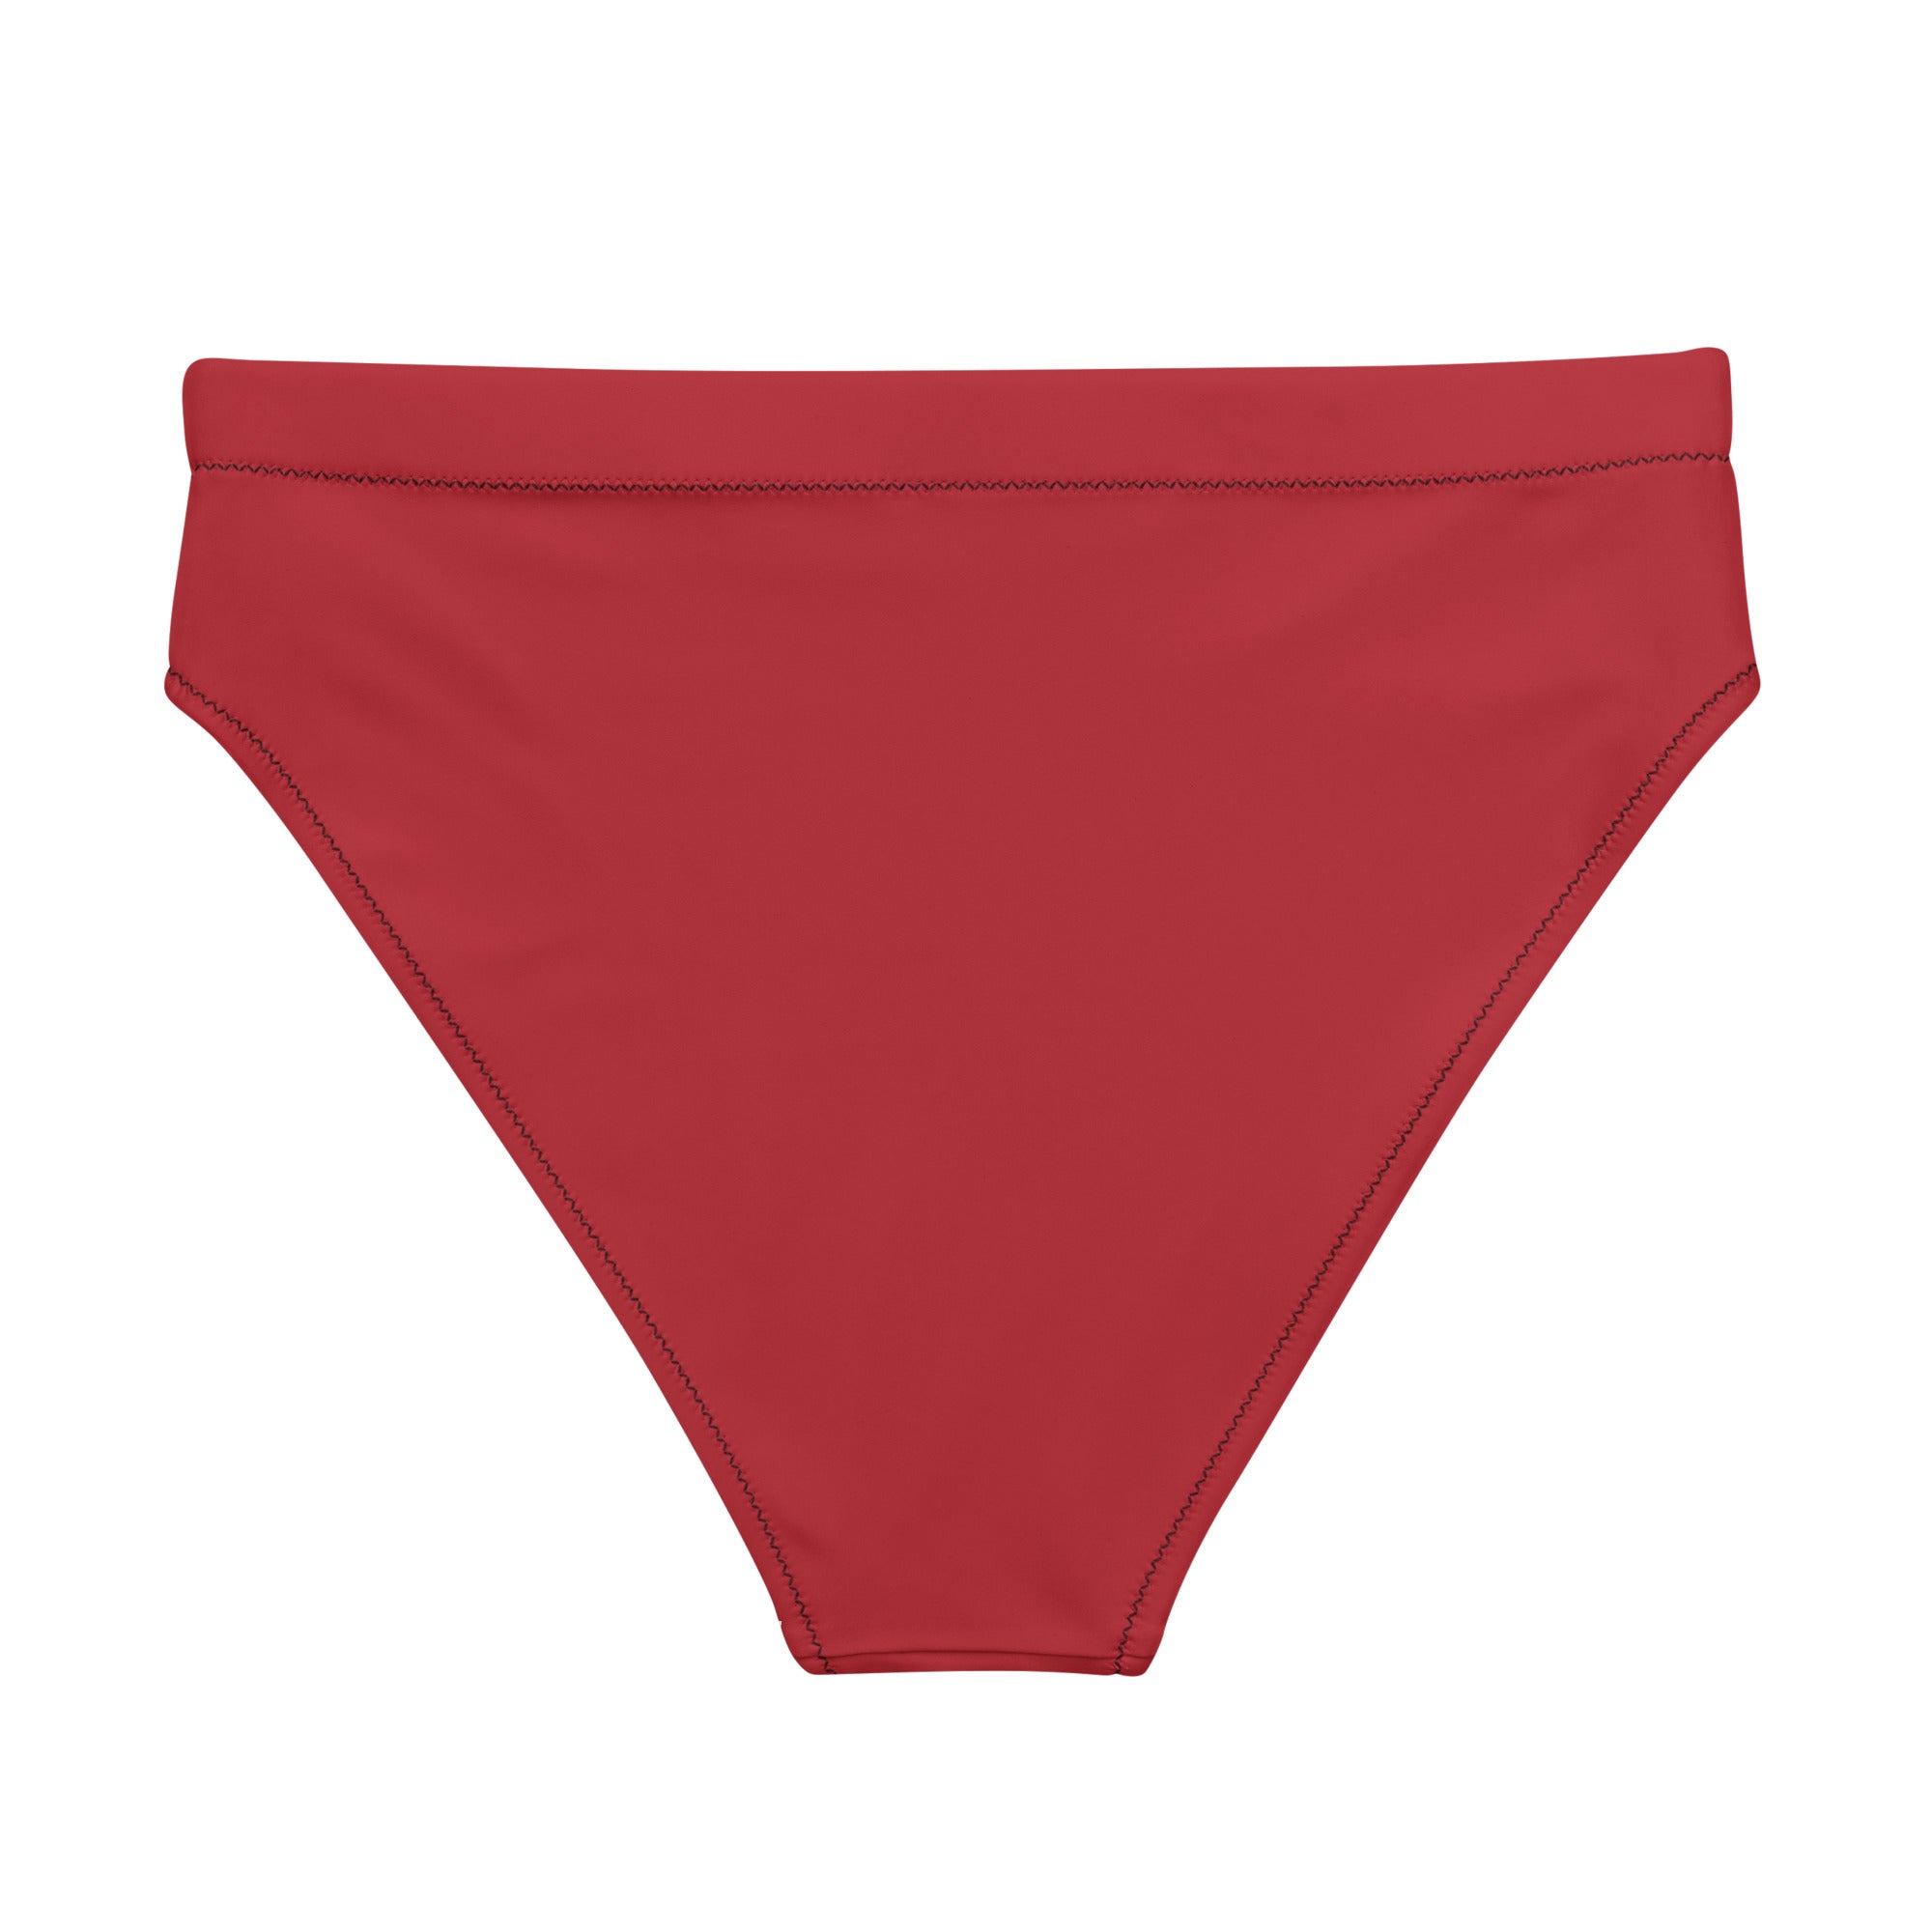 Solid red bikini bottoms women's swimwear